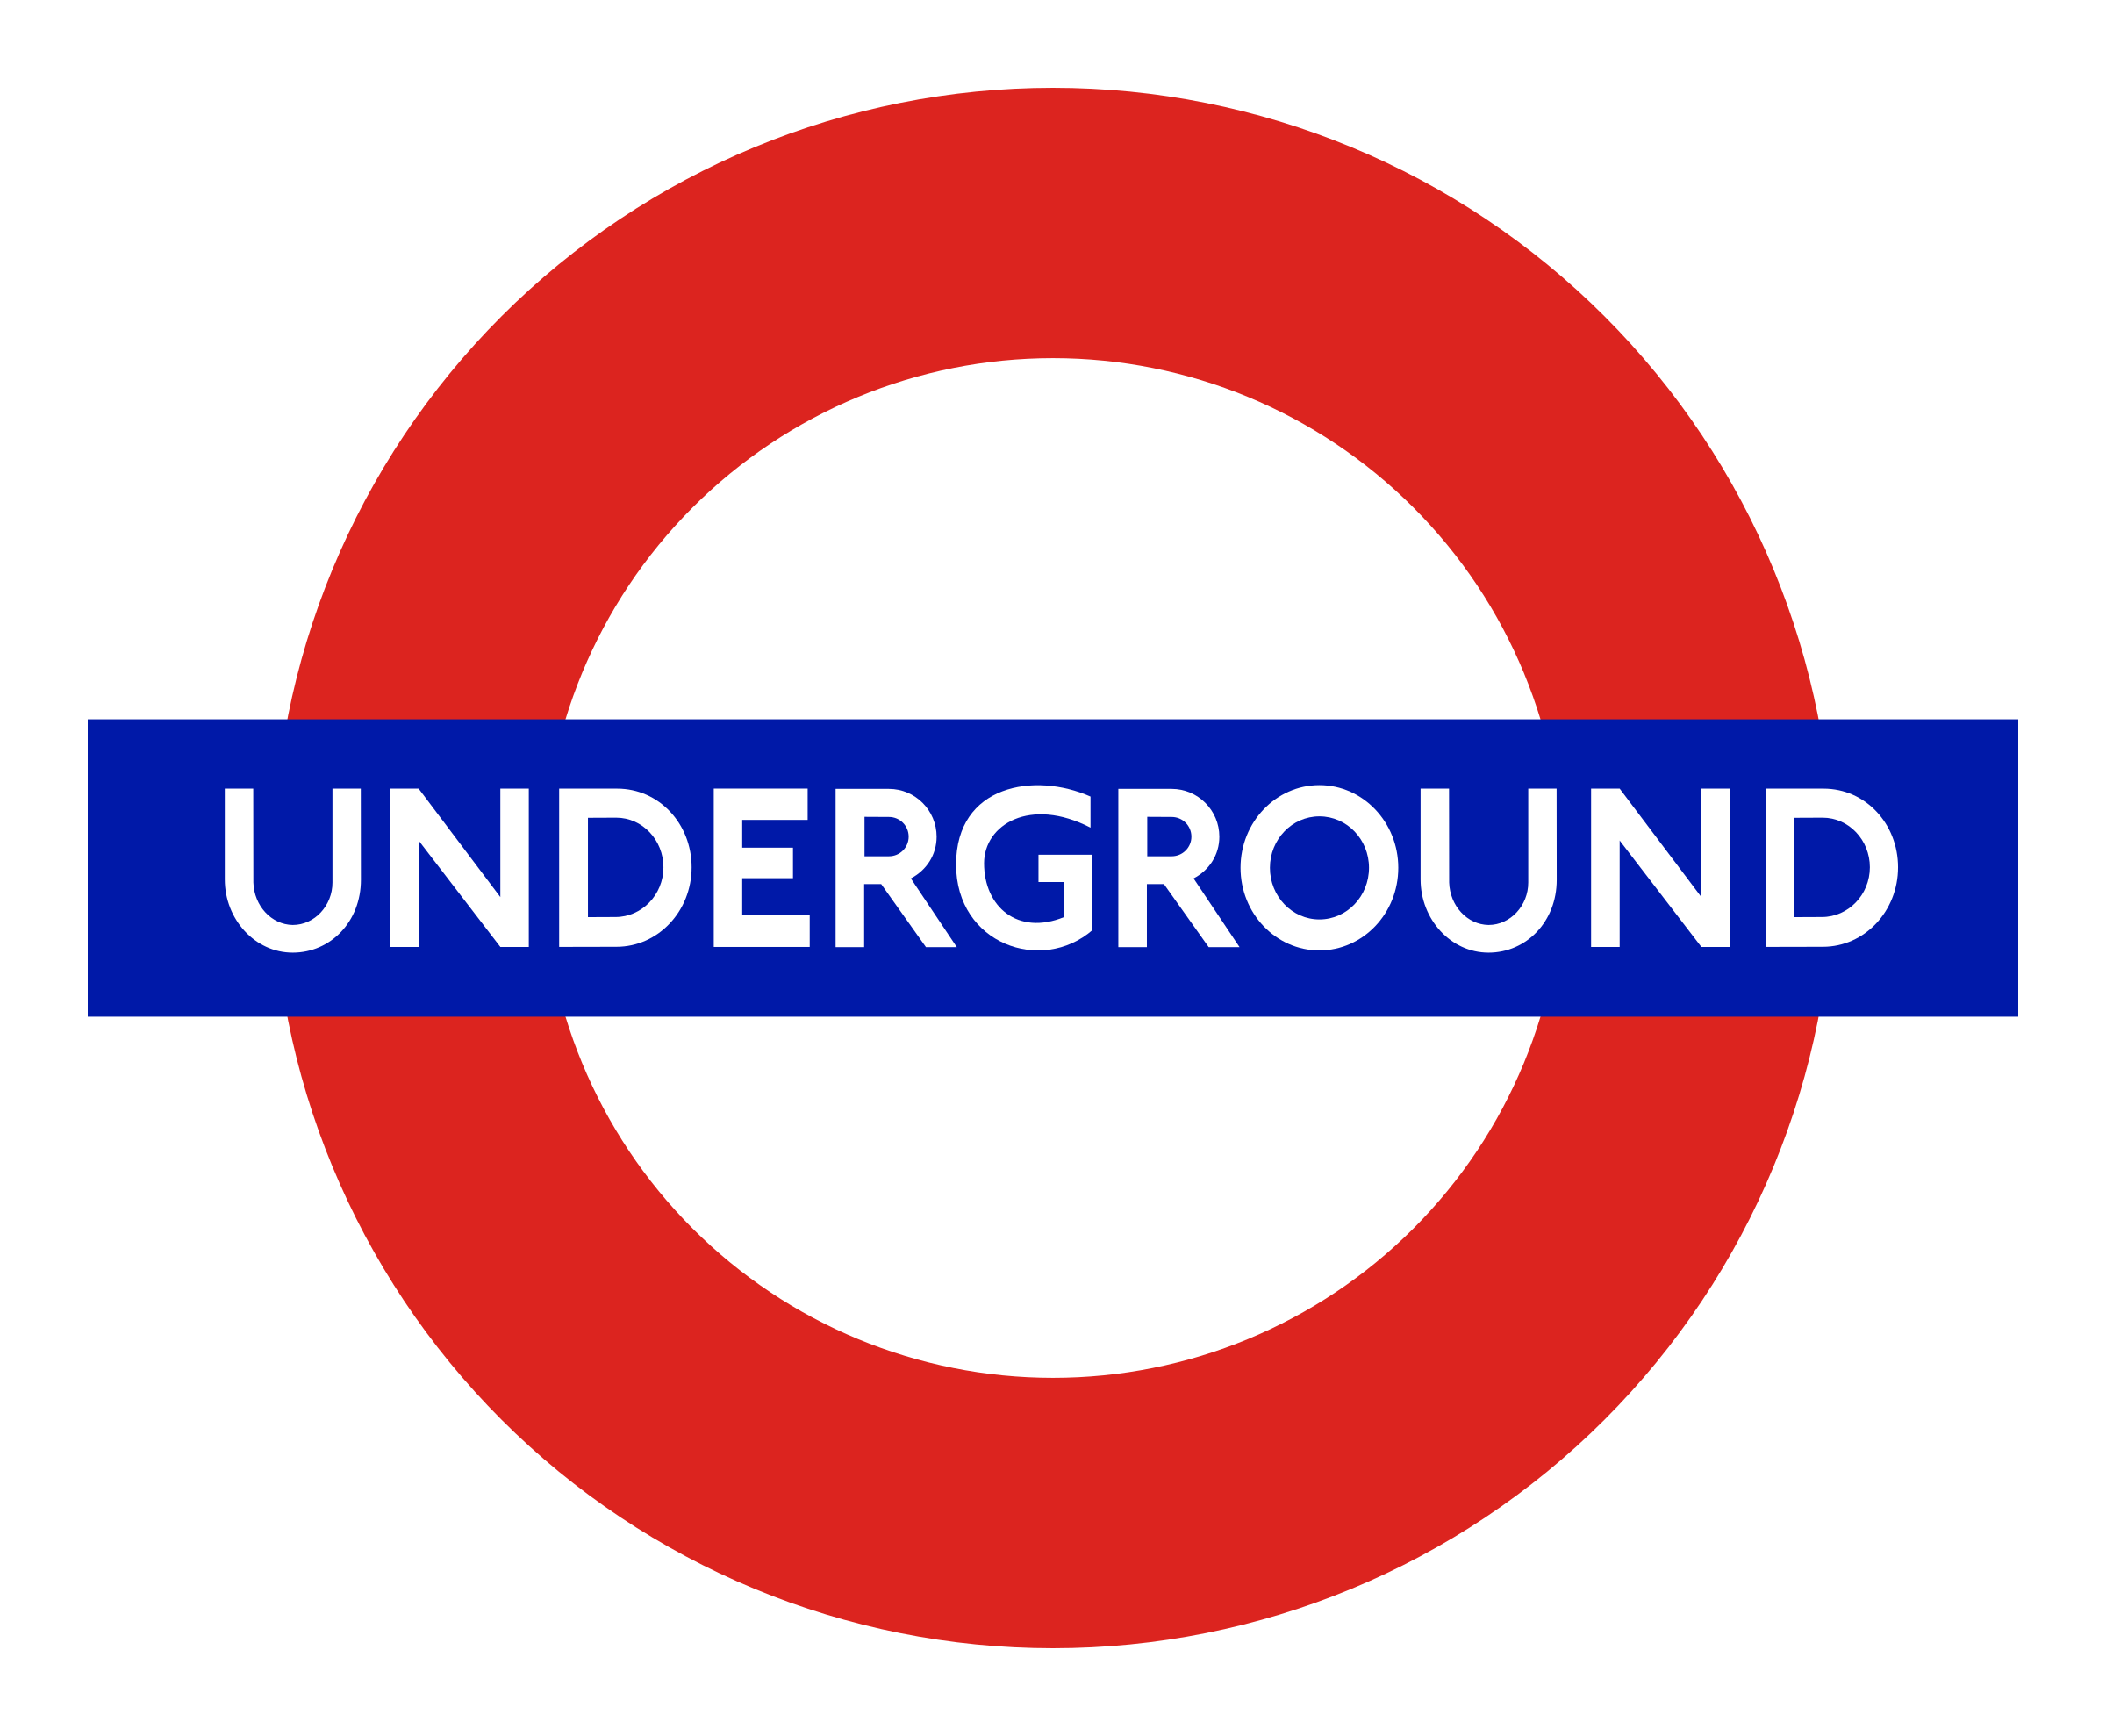 London Underground Logo PNG Transparent & SVG Vector - Freebie Supply